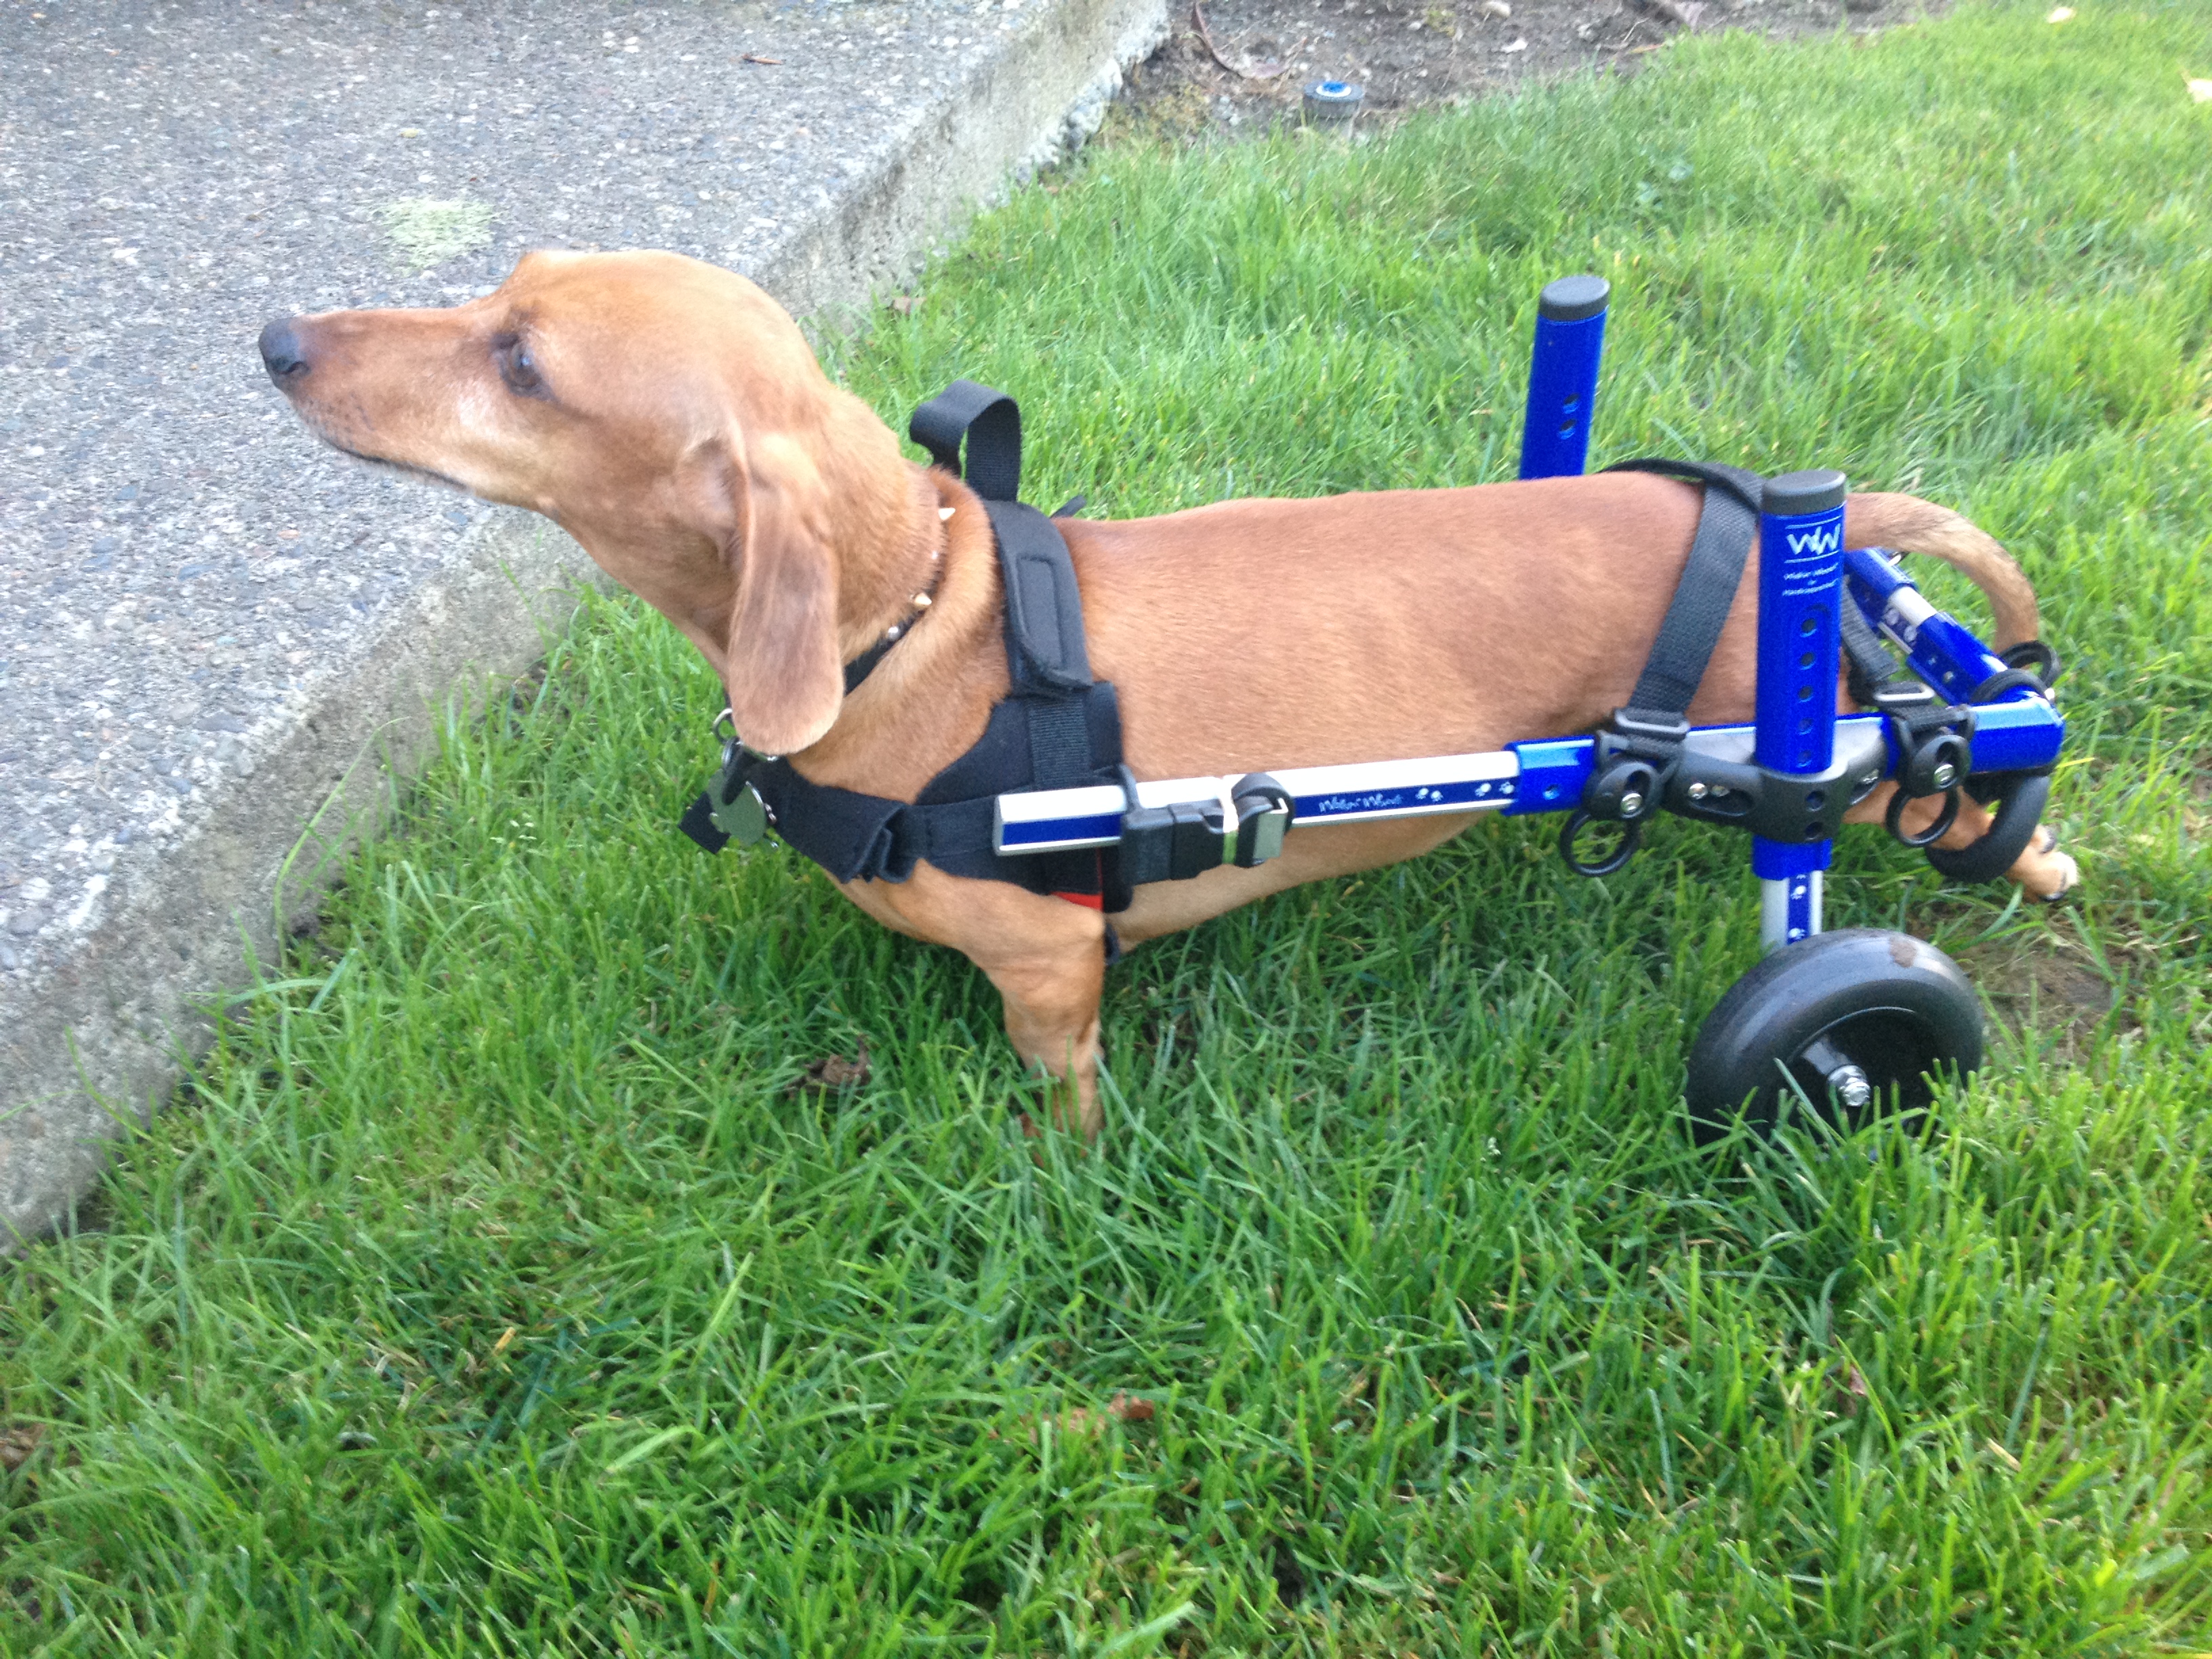 Paralyzed dachshund, Tucker is learning to walk again